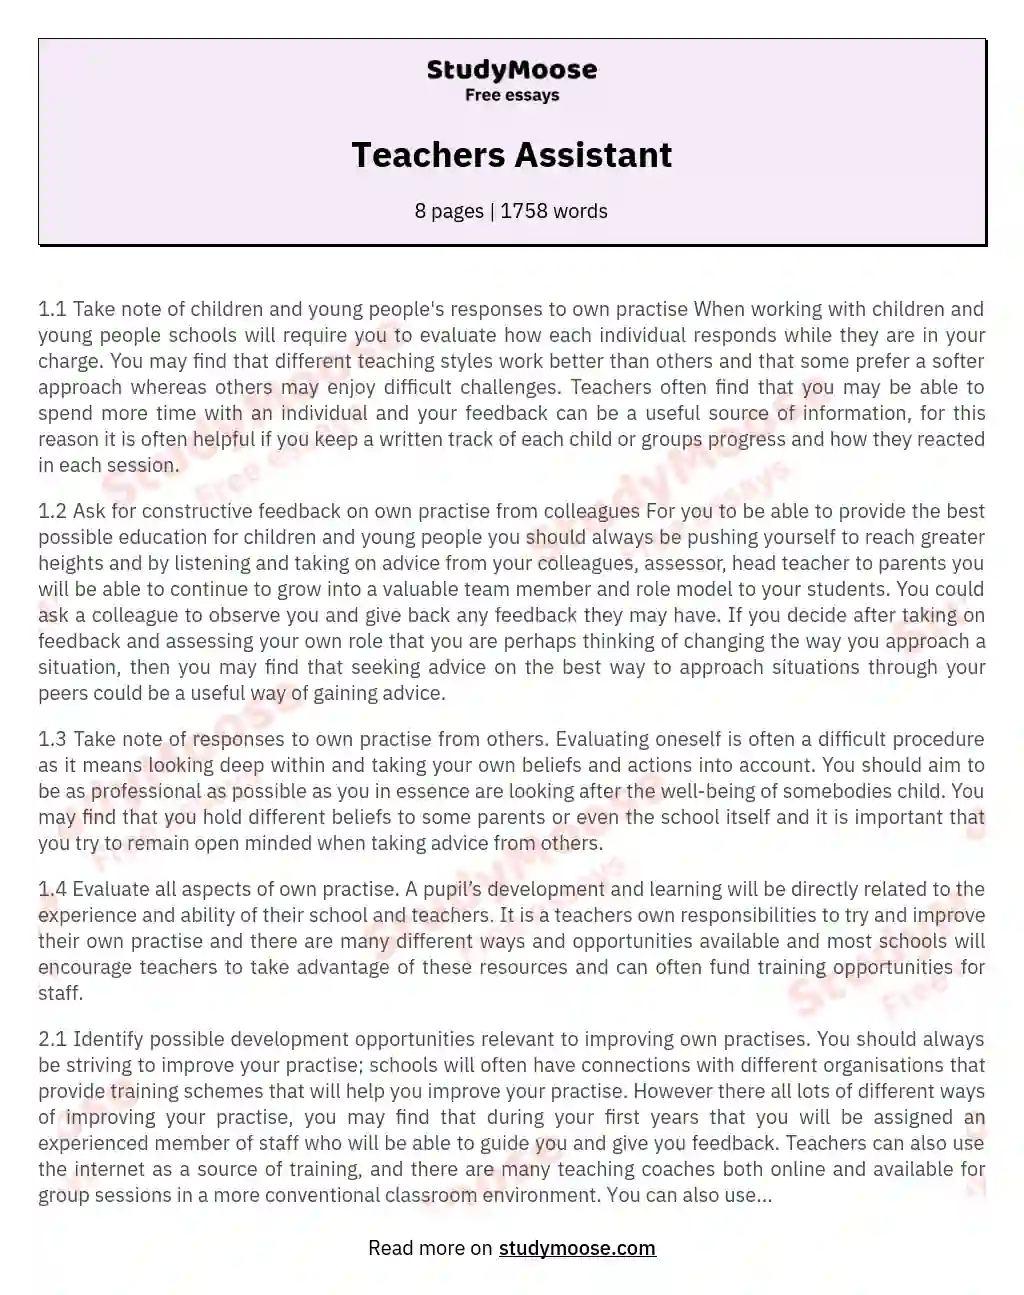 Teachers Assistant essay